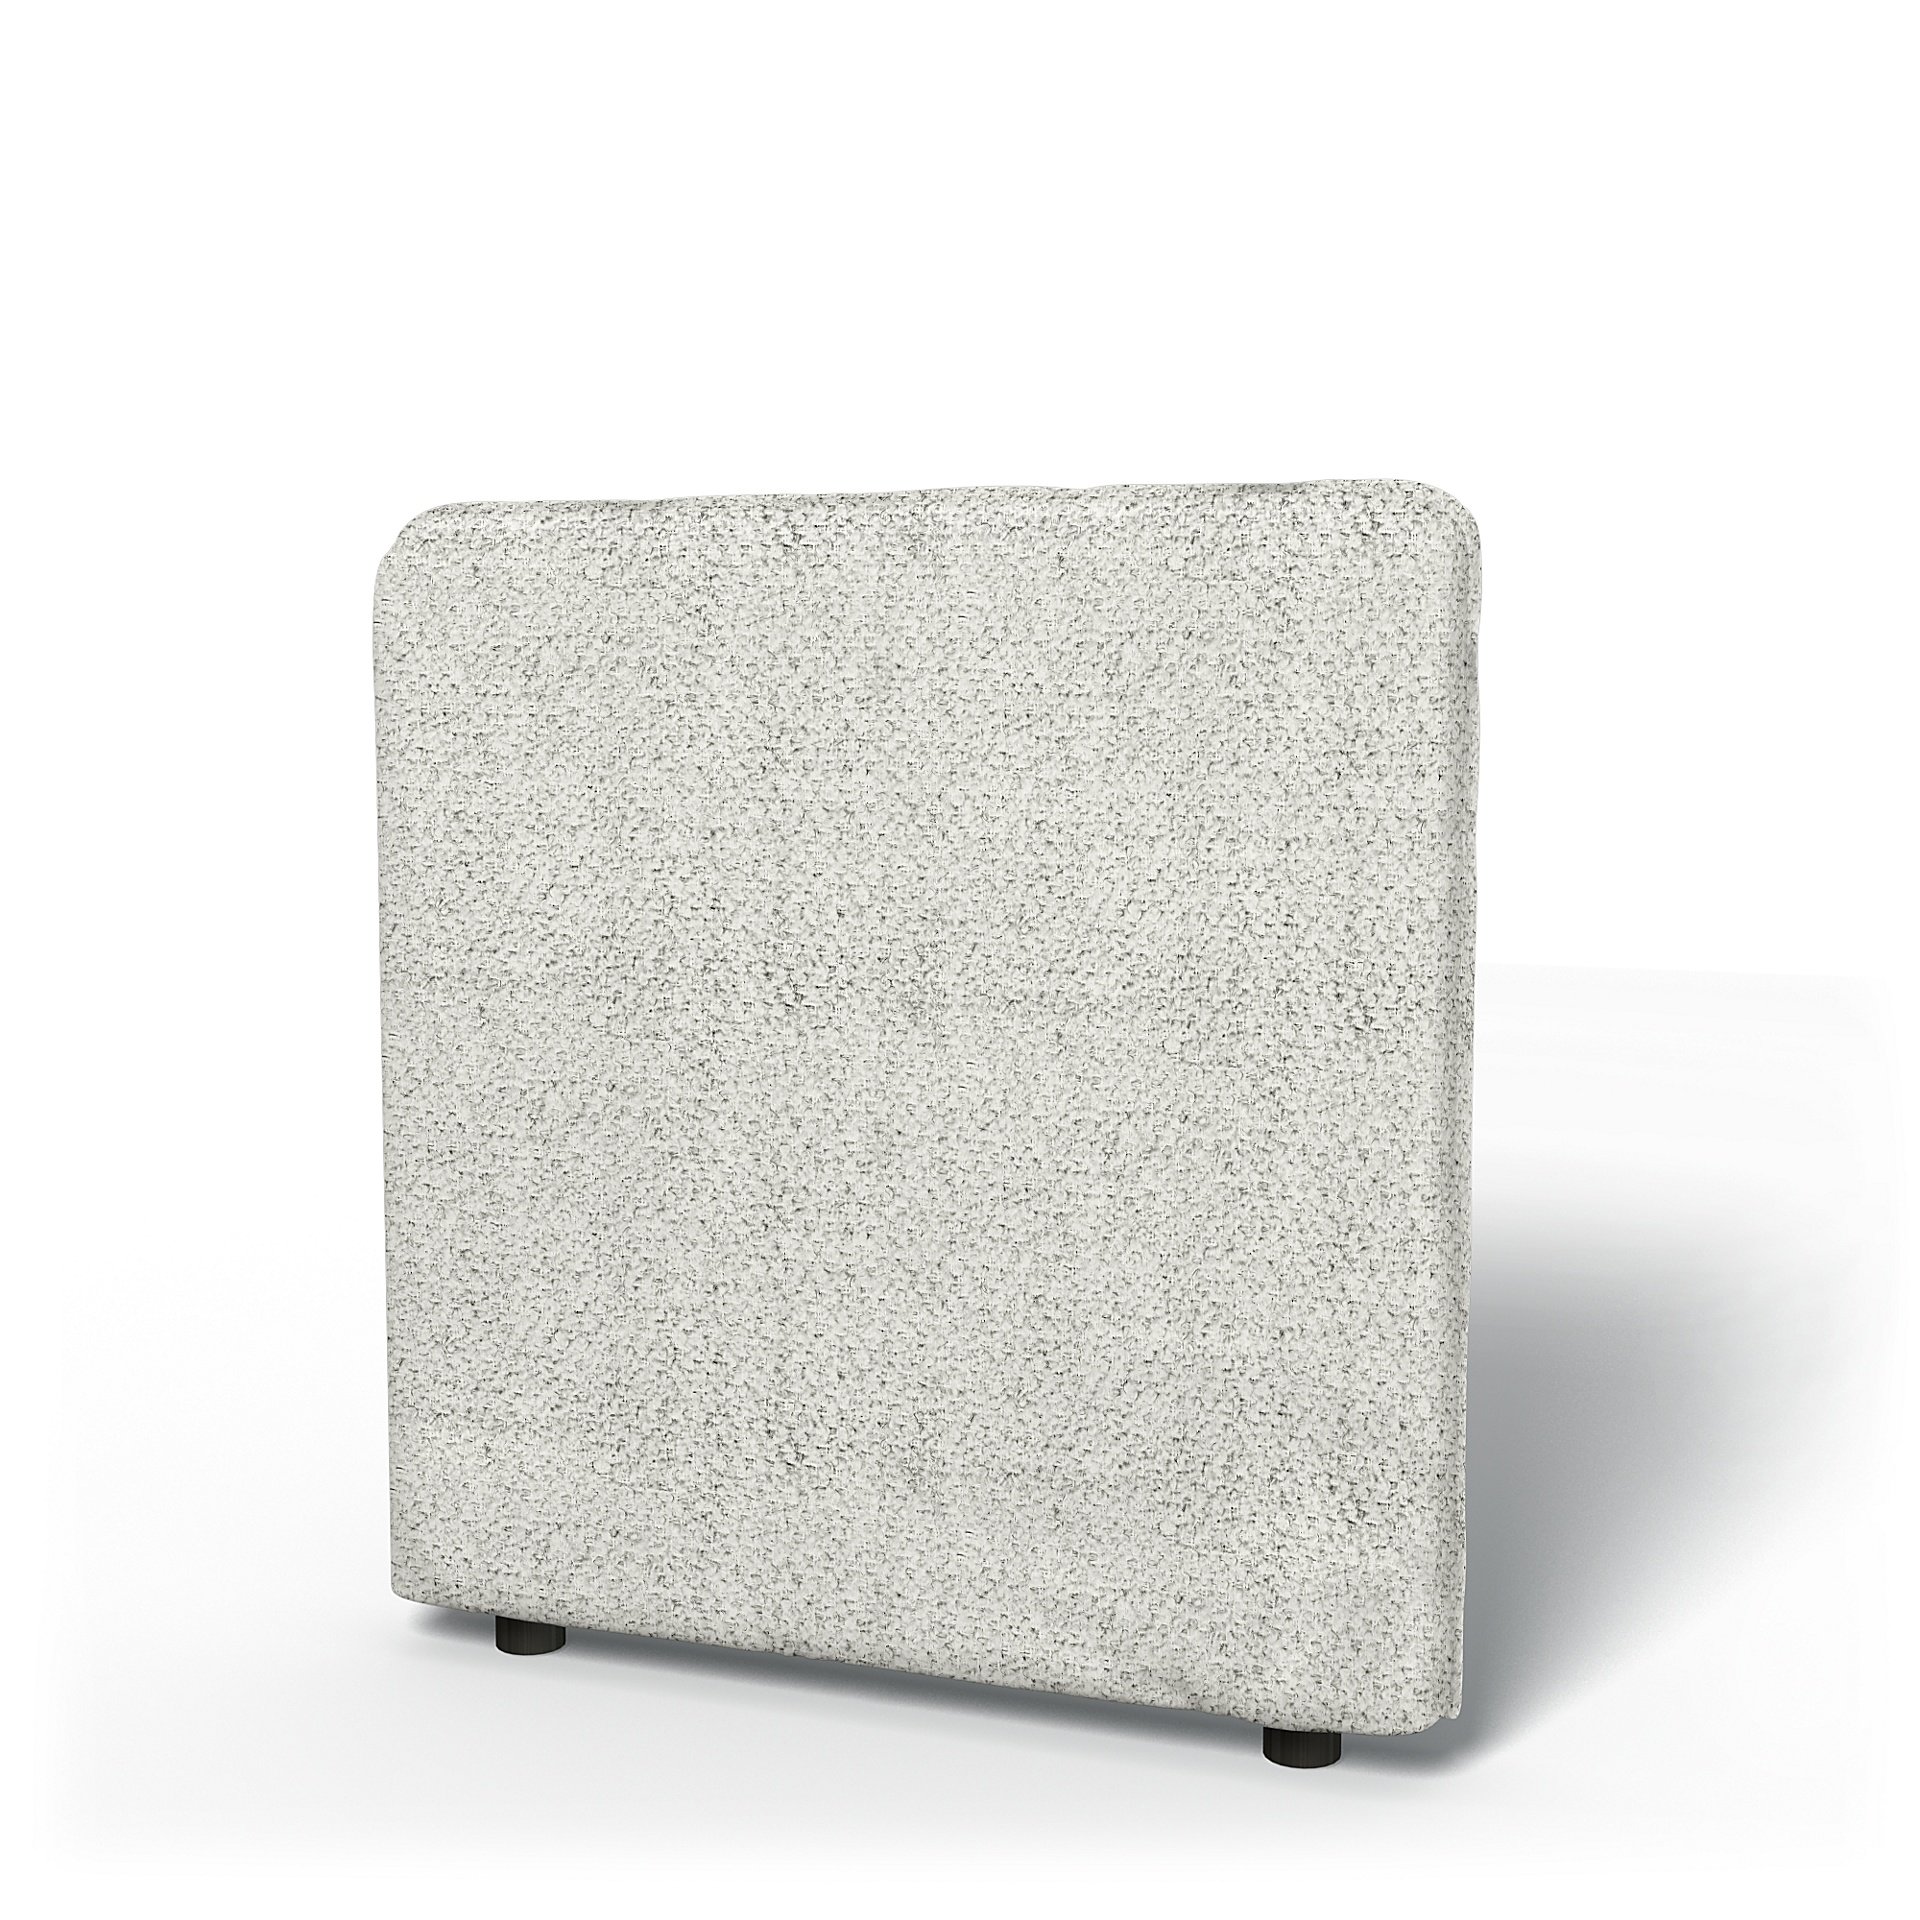 IKEA - Vallentuna Low Backrest Cover 80x80cm 32x32in, Ivory, Boucle & Texture - Bemz